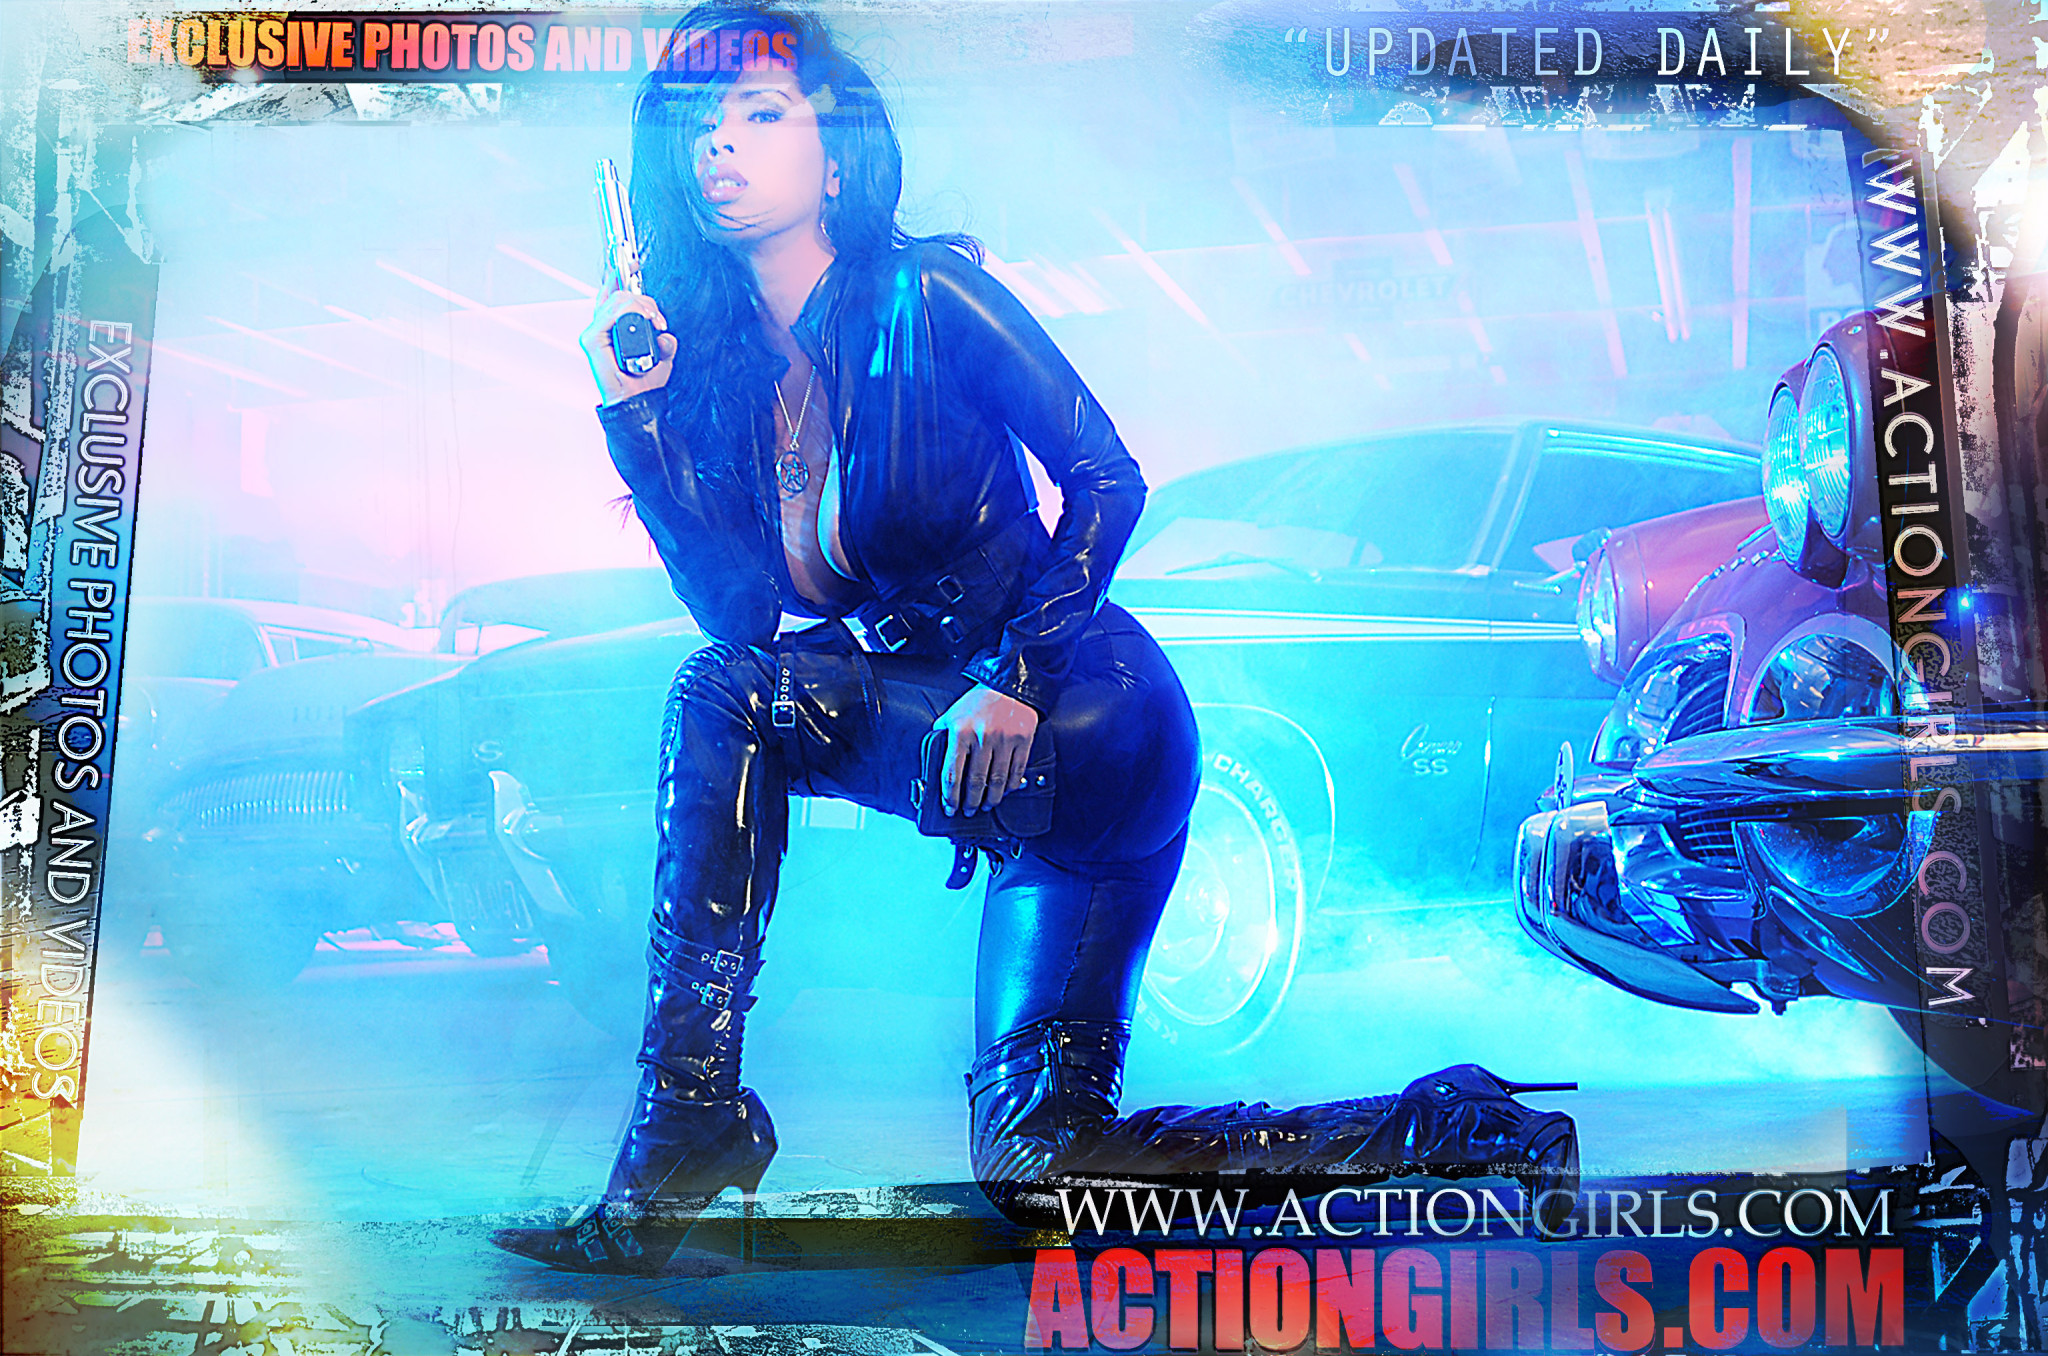 Esclusivo actiongirls web poster deluxe ser 5 foto actiongirl
 #70962468